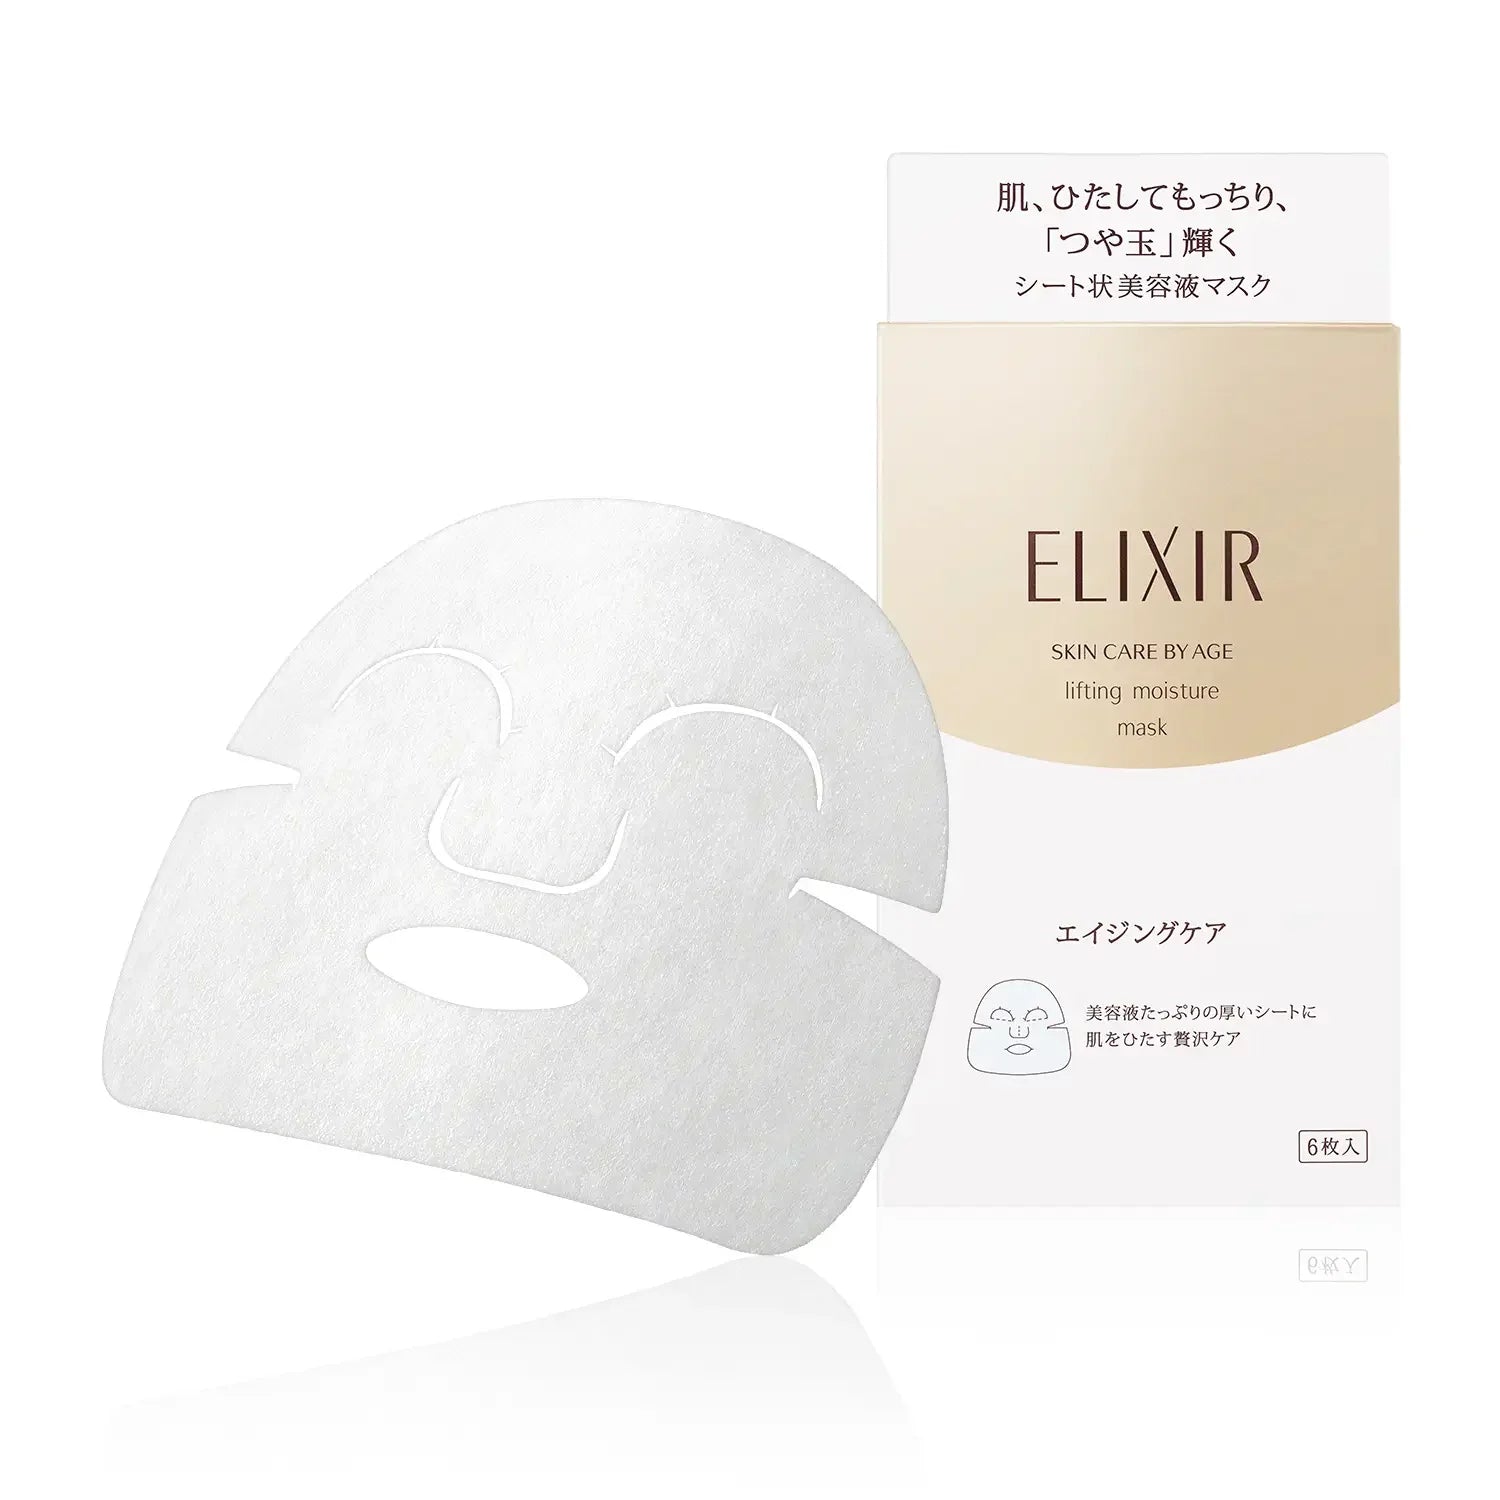 Shiseido Elixir Lift Moist Wrinkle Firming Facial Sheet Mask 6 ct.